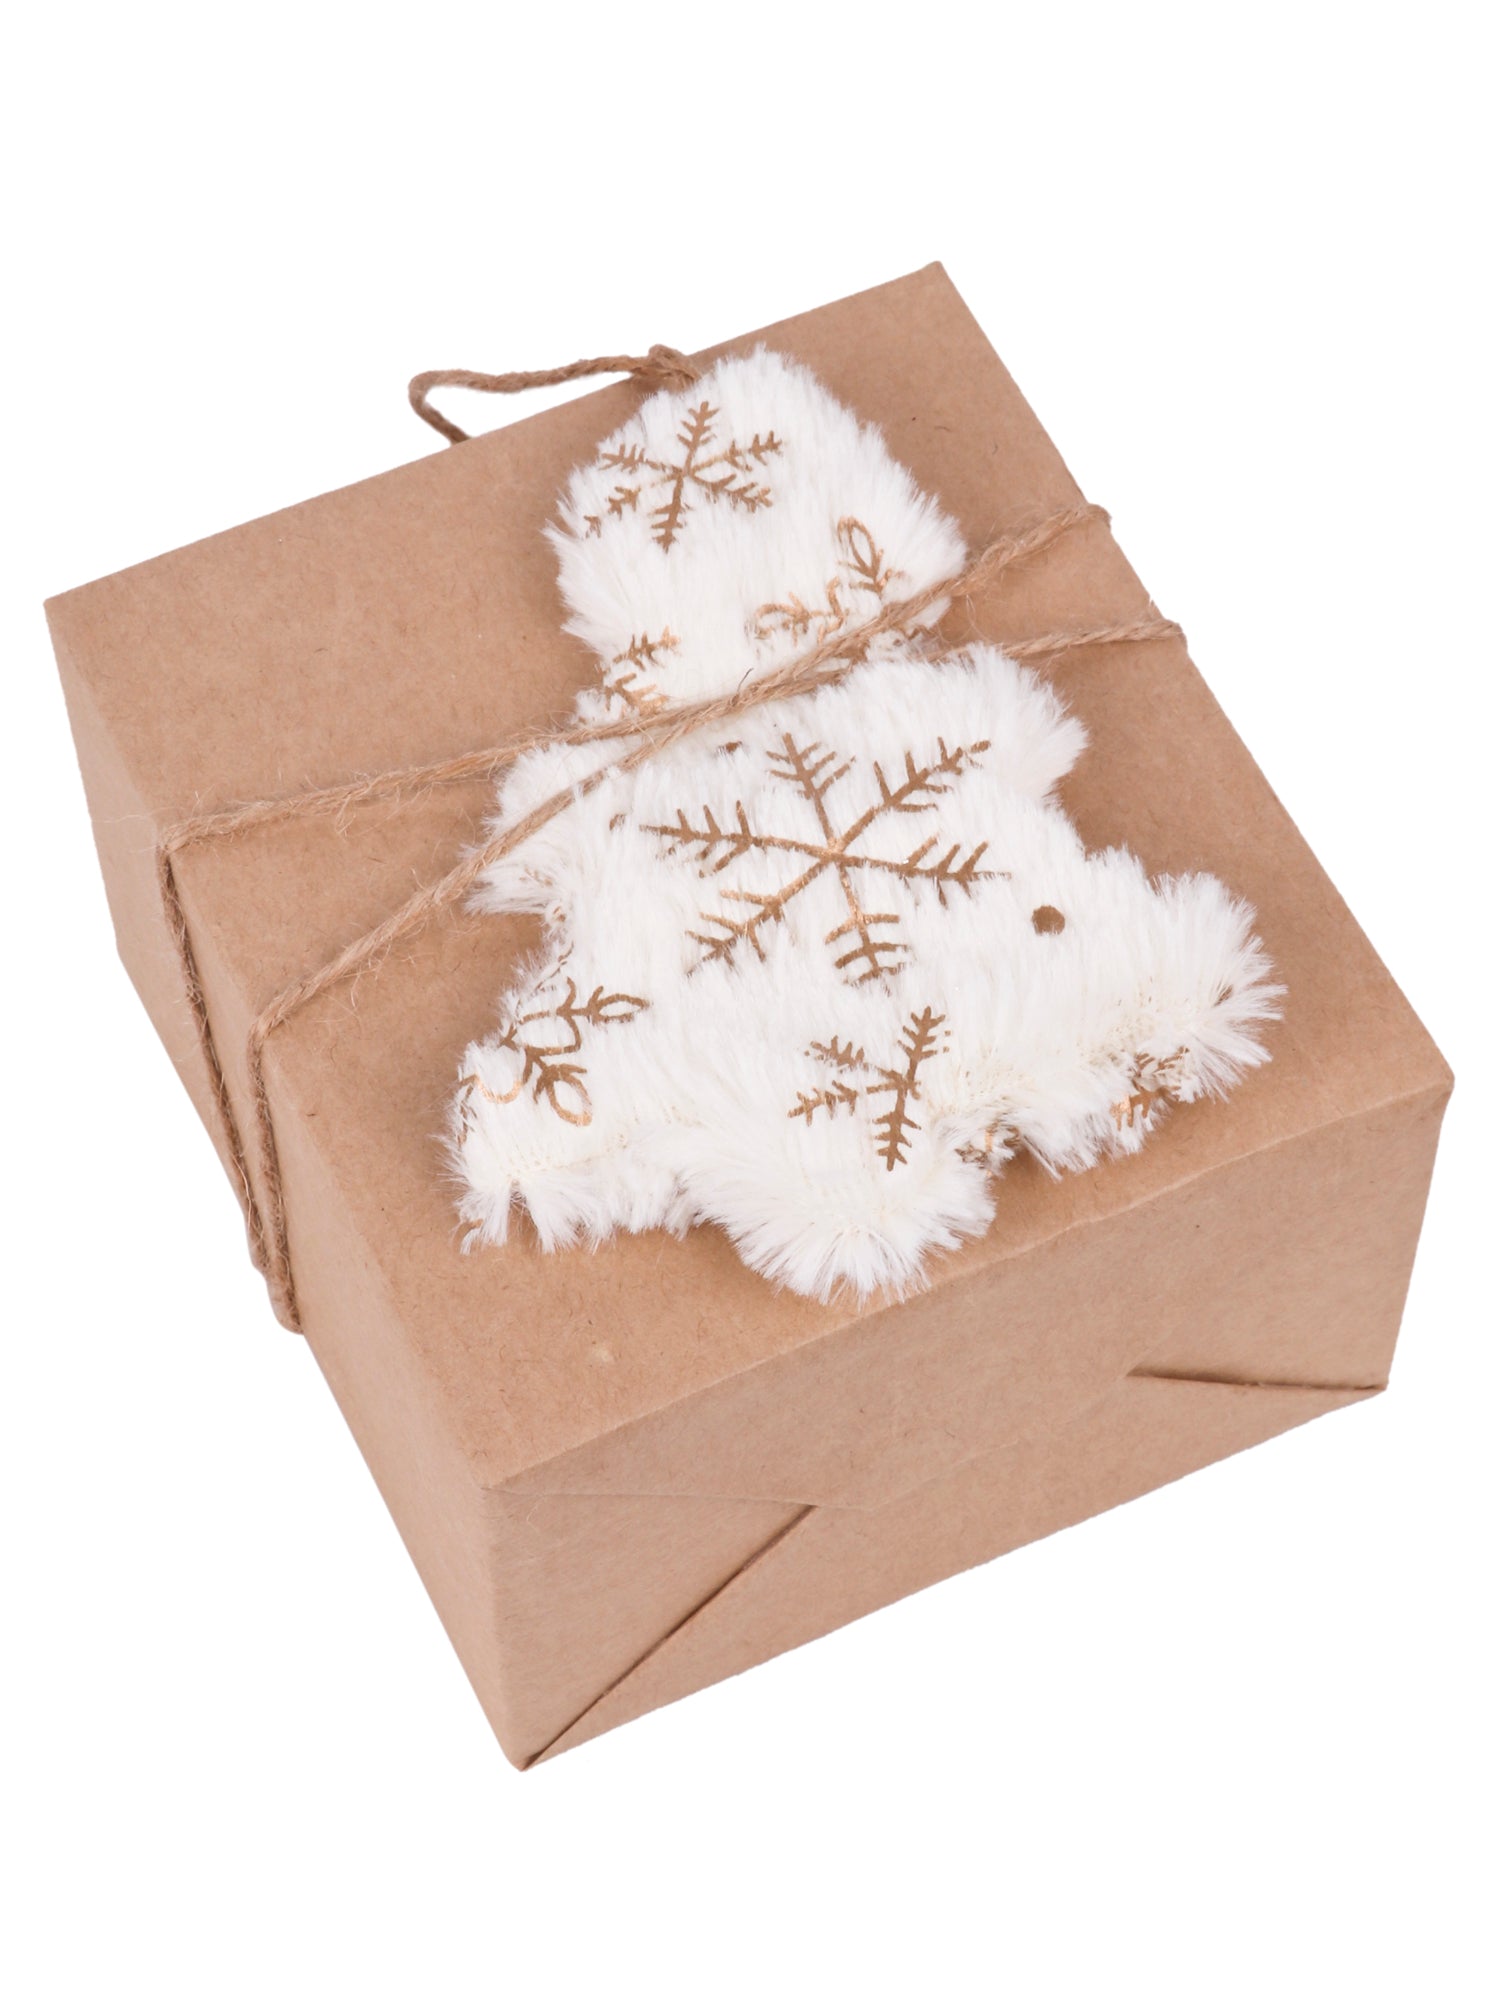 6pcs Christmas Tree Ornaments Gift Tags - Heart Stars